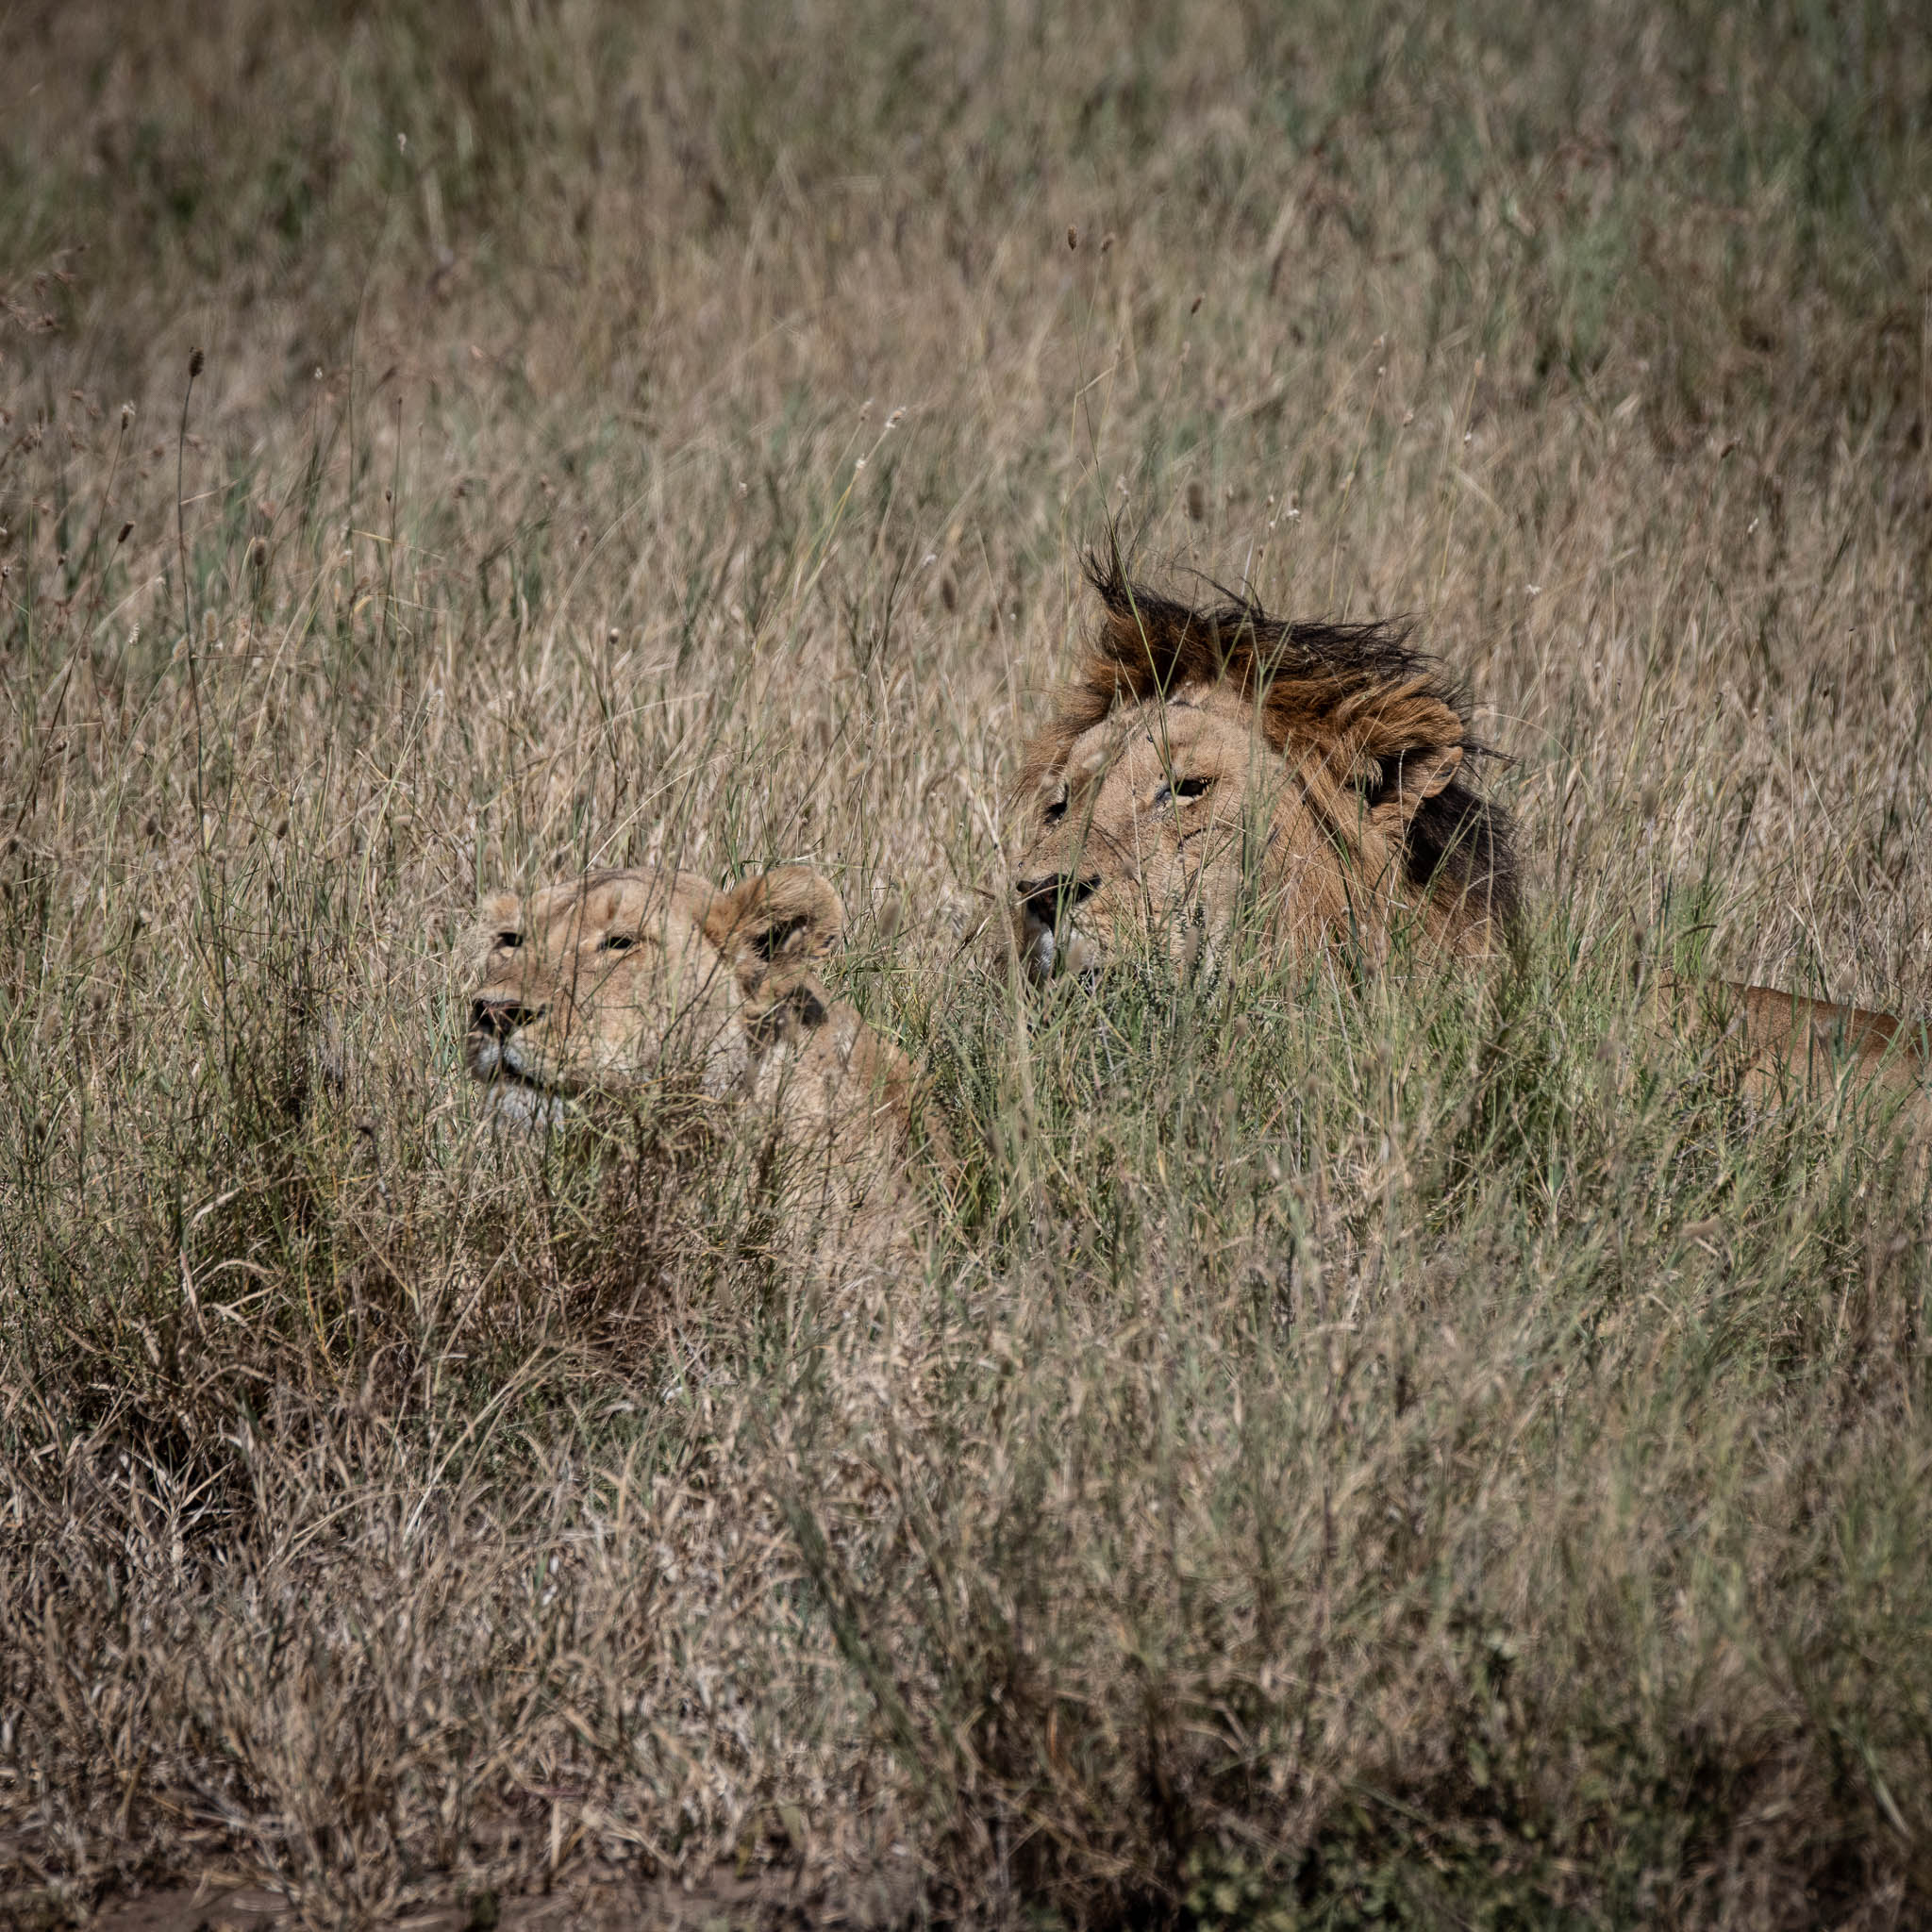 Mating Time in Serengeti